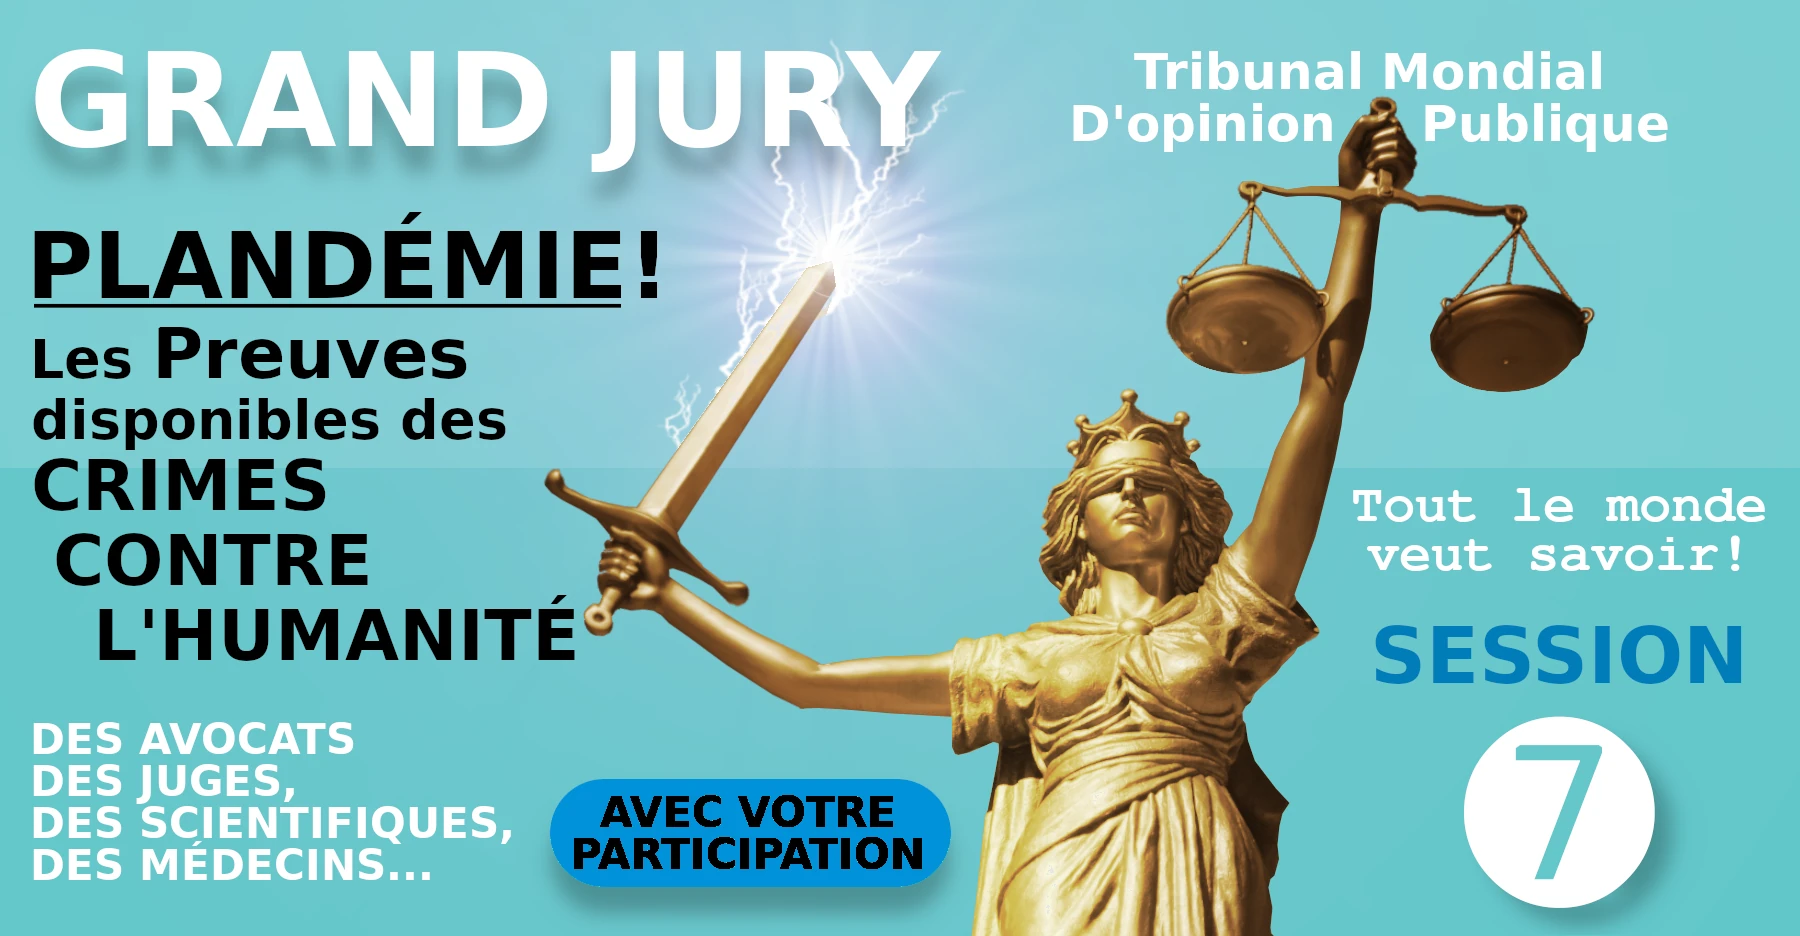 GRAND JURY - 7 - TOTALITARISME & PROPAGANDE. JUSTICE ENSEMBLE!